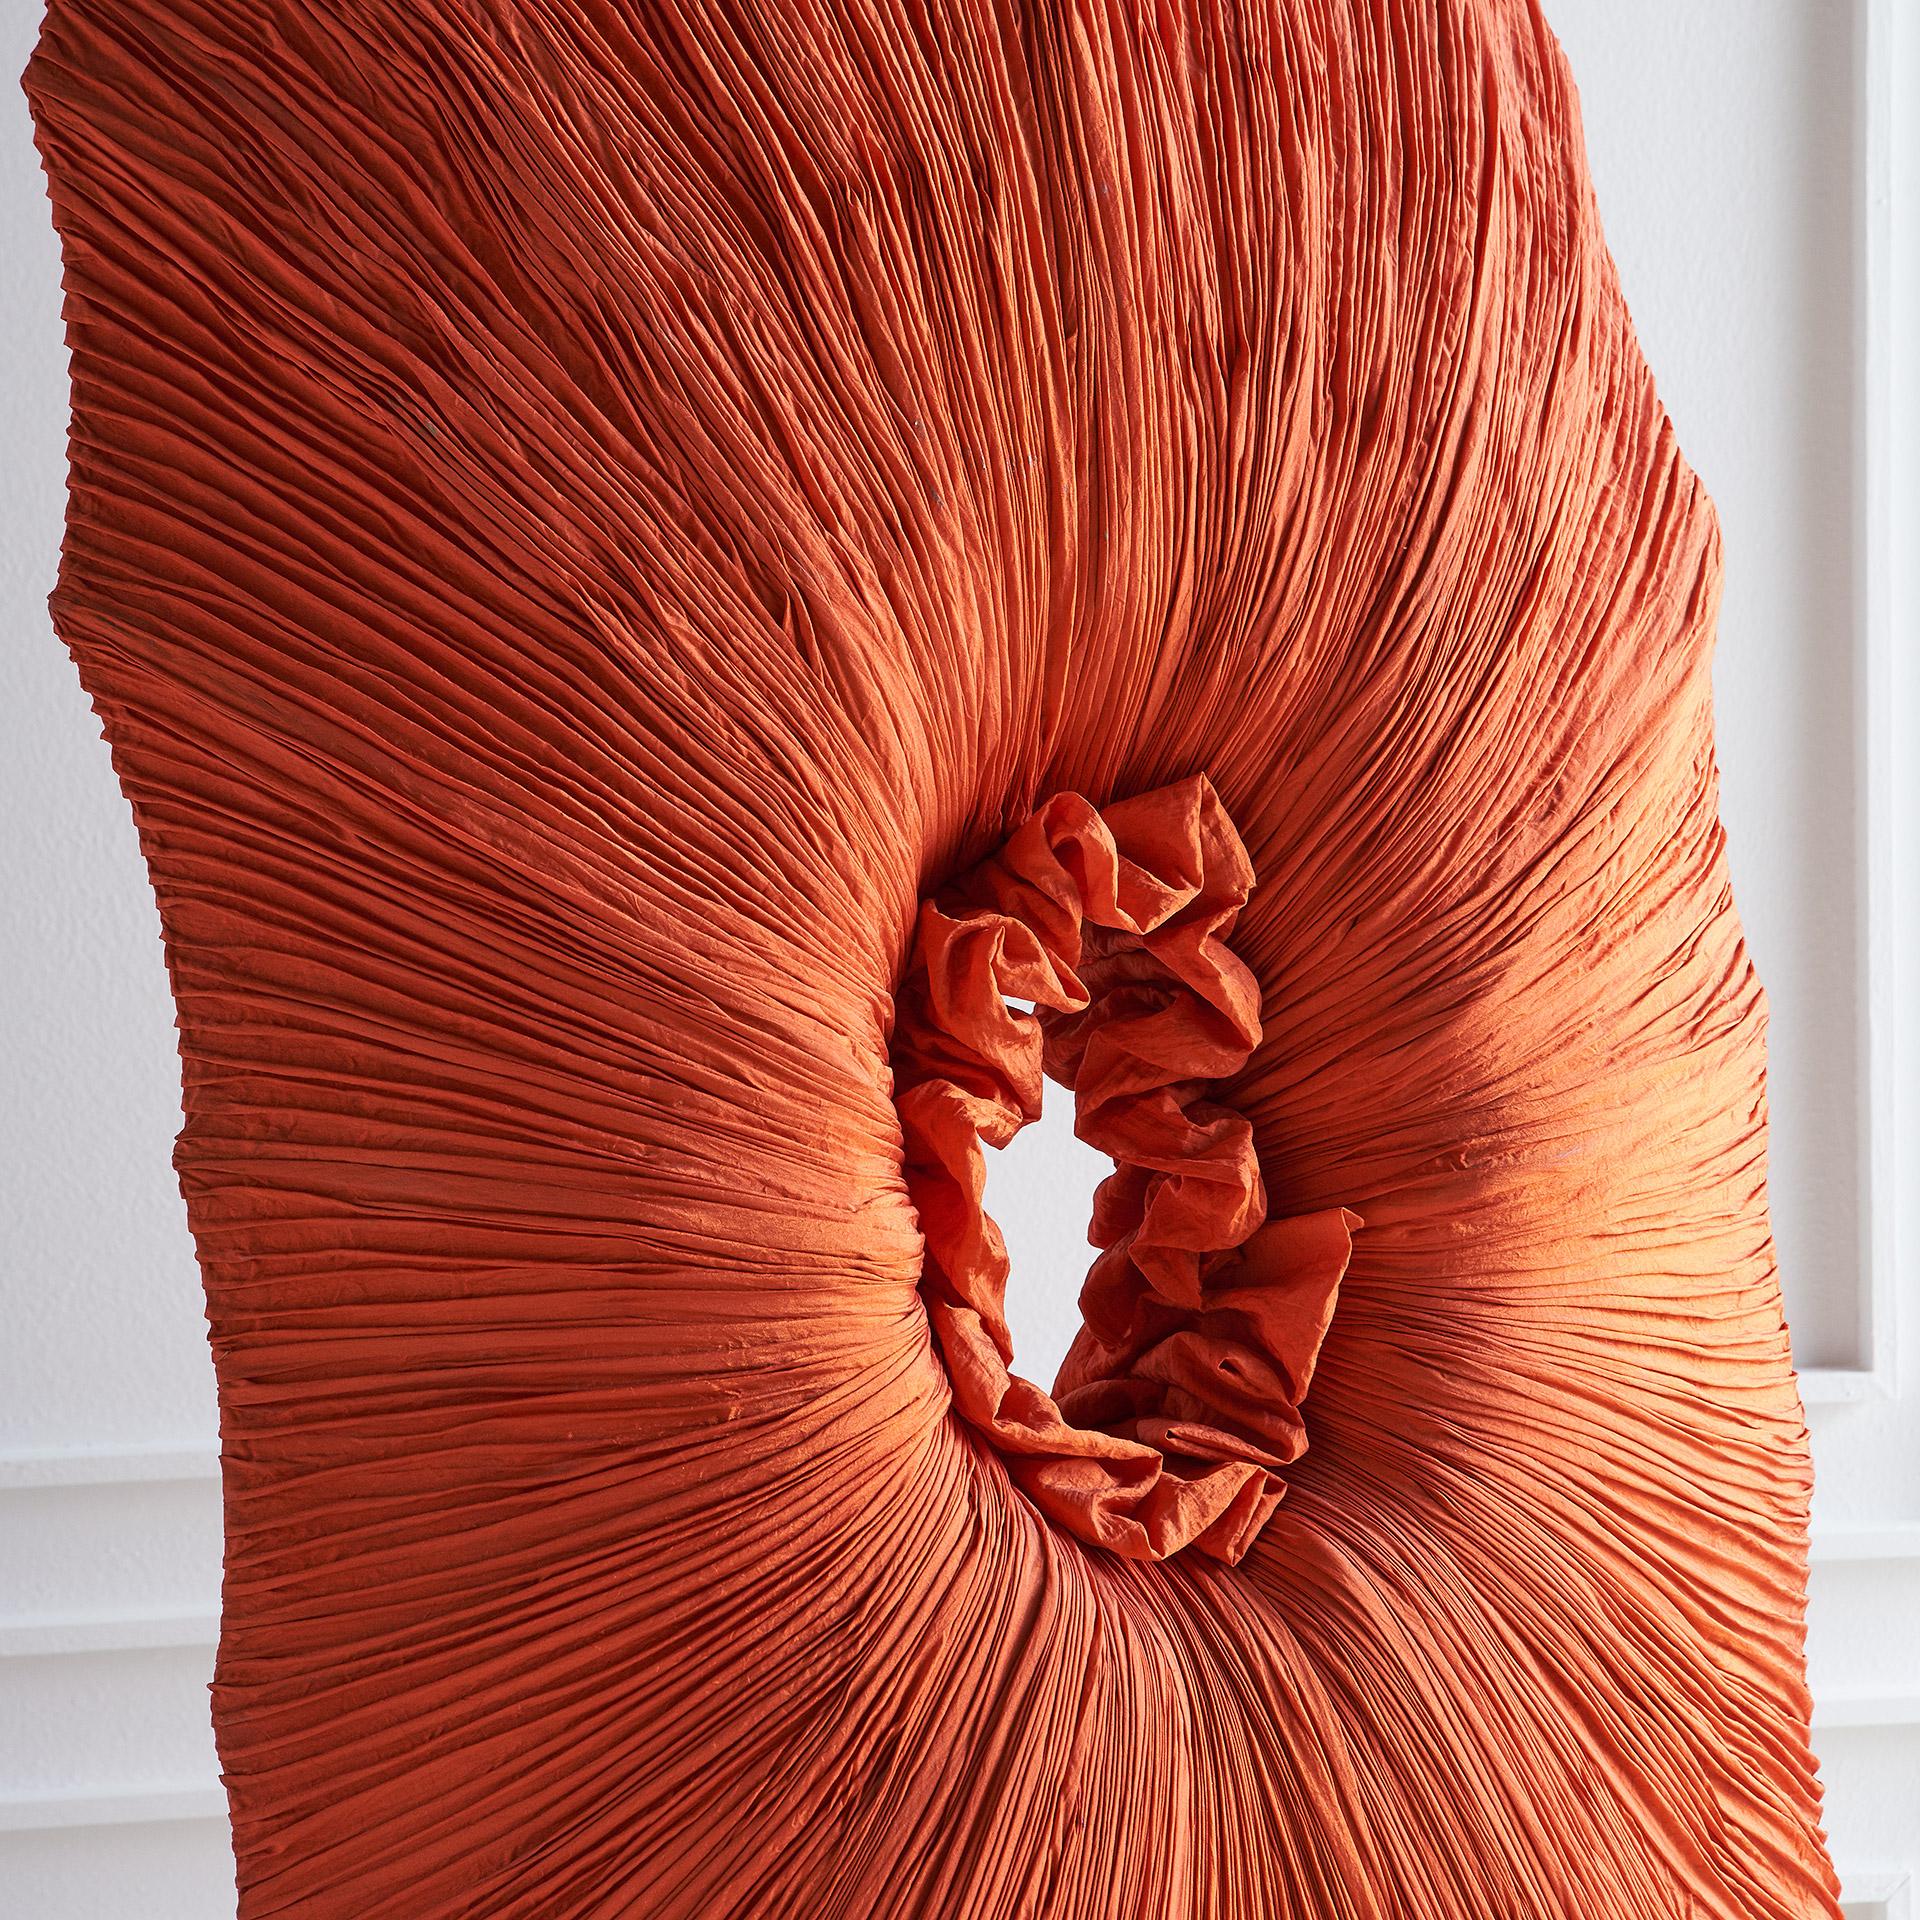 Organic Floor Sculpture in Coral Silk  2